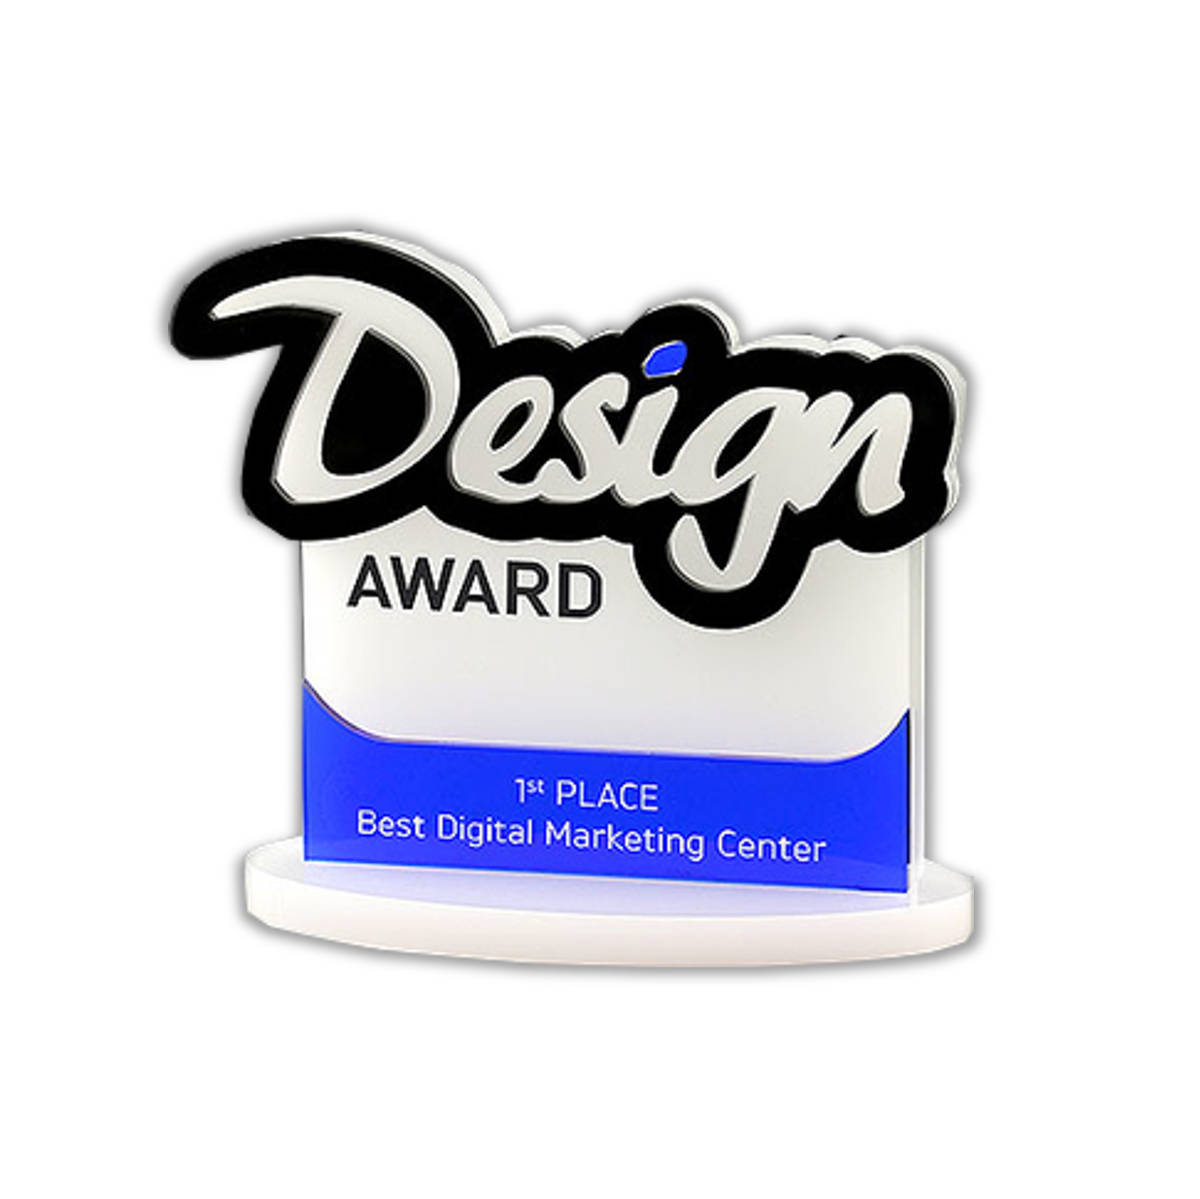 Design-Award